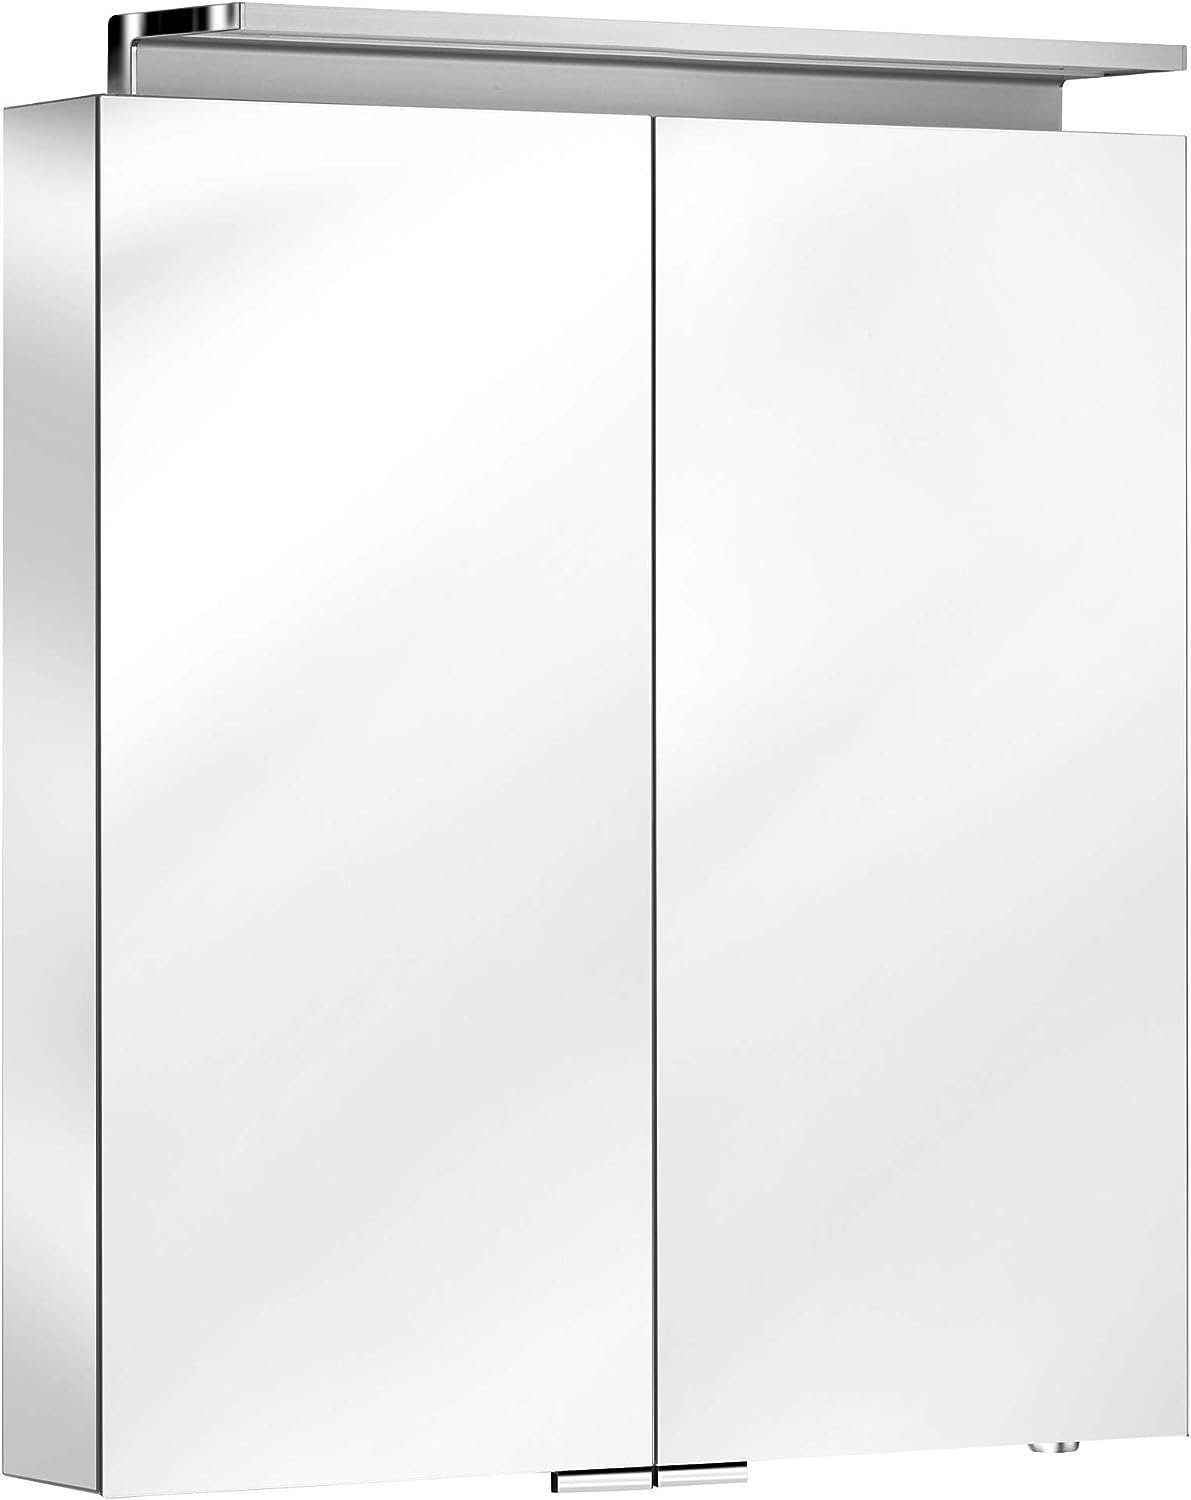 Keuco Spiegelschrank Royal L1 (Badezimmerspiegelschrank mit Beleuchtung LED) inkl. Wandbeleuchtung, verspiegelter Korpus, 2-türig, 80 cm